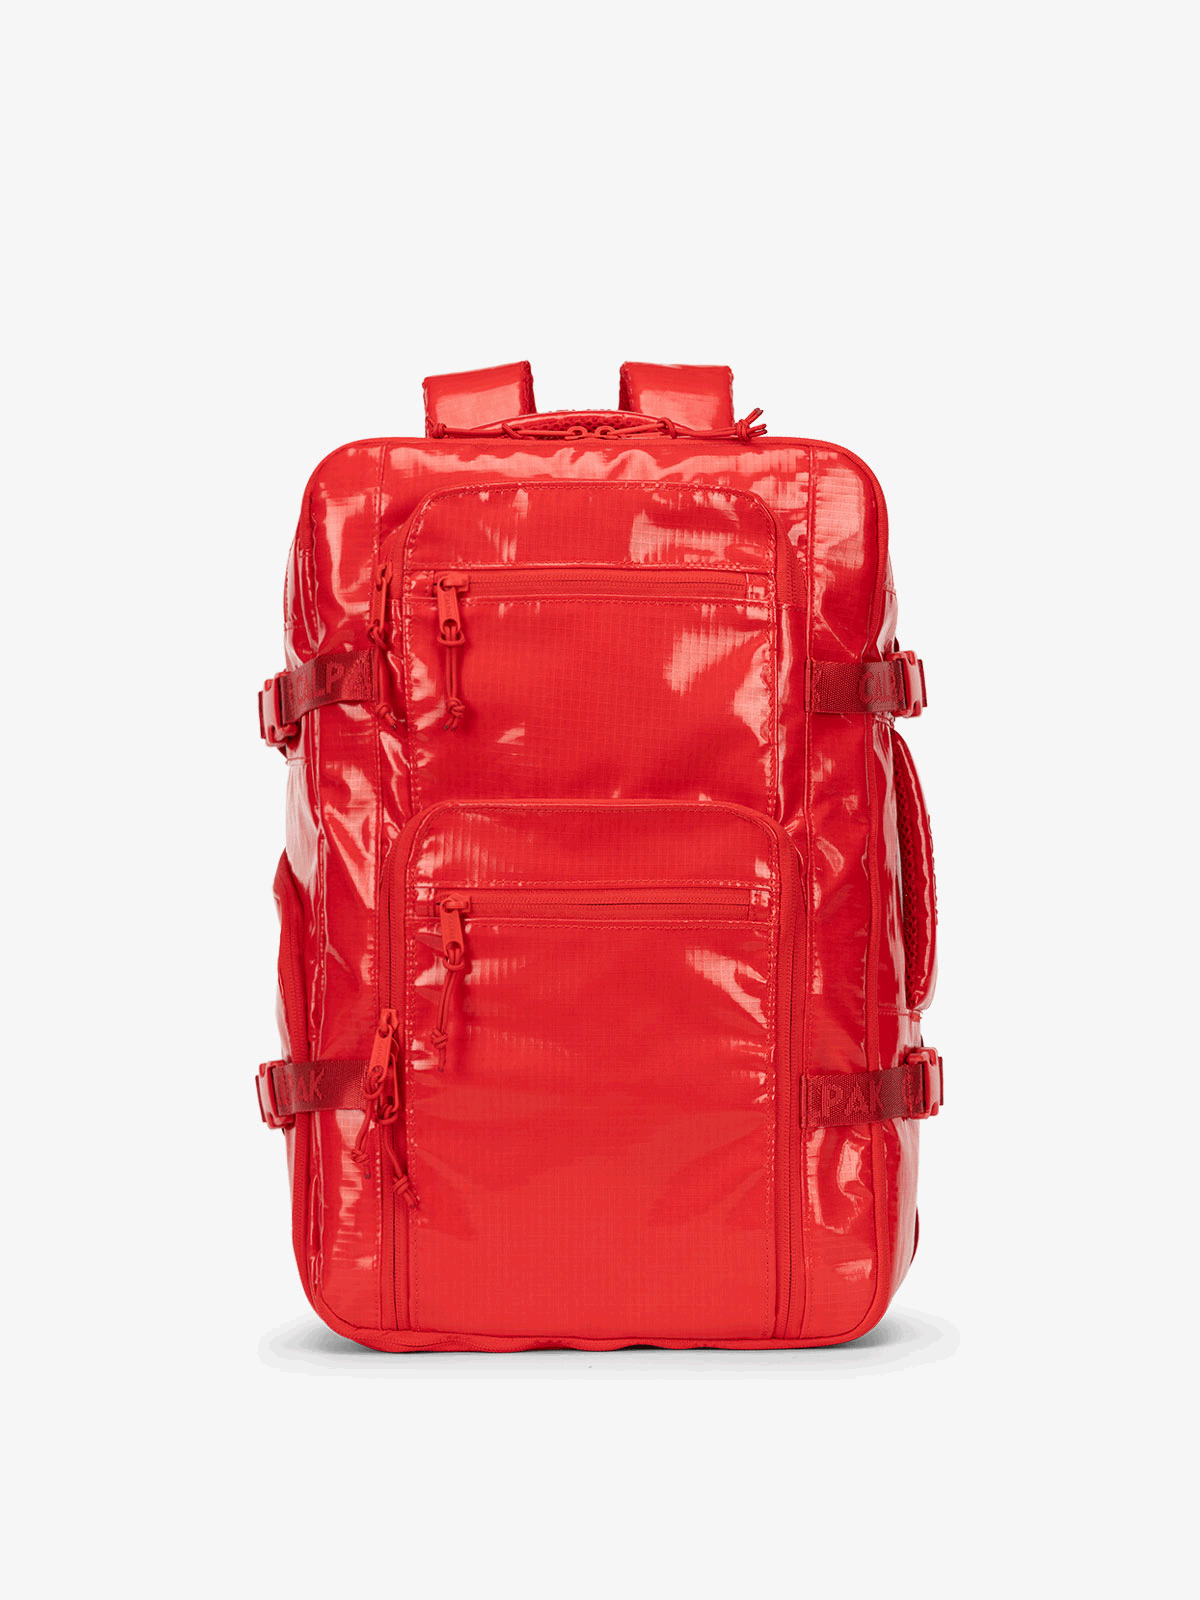 CALPAK Terra 26L Laptop Backpack and Duffel Bag 360 view in red flame